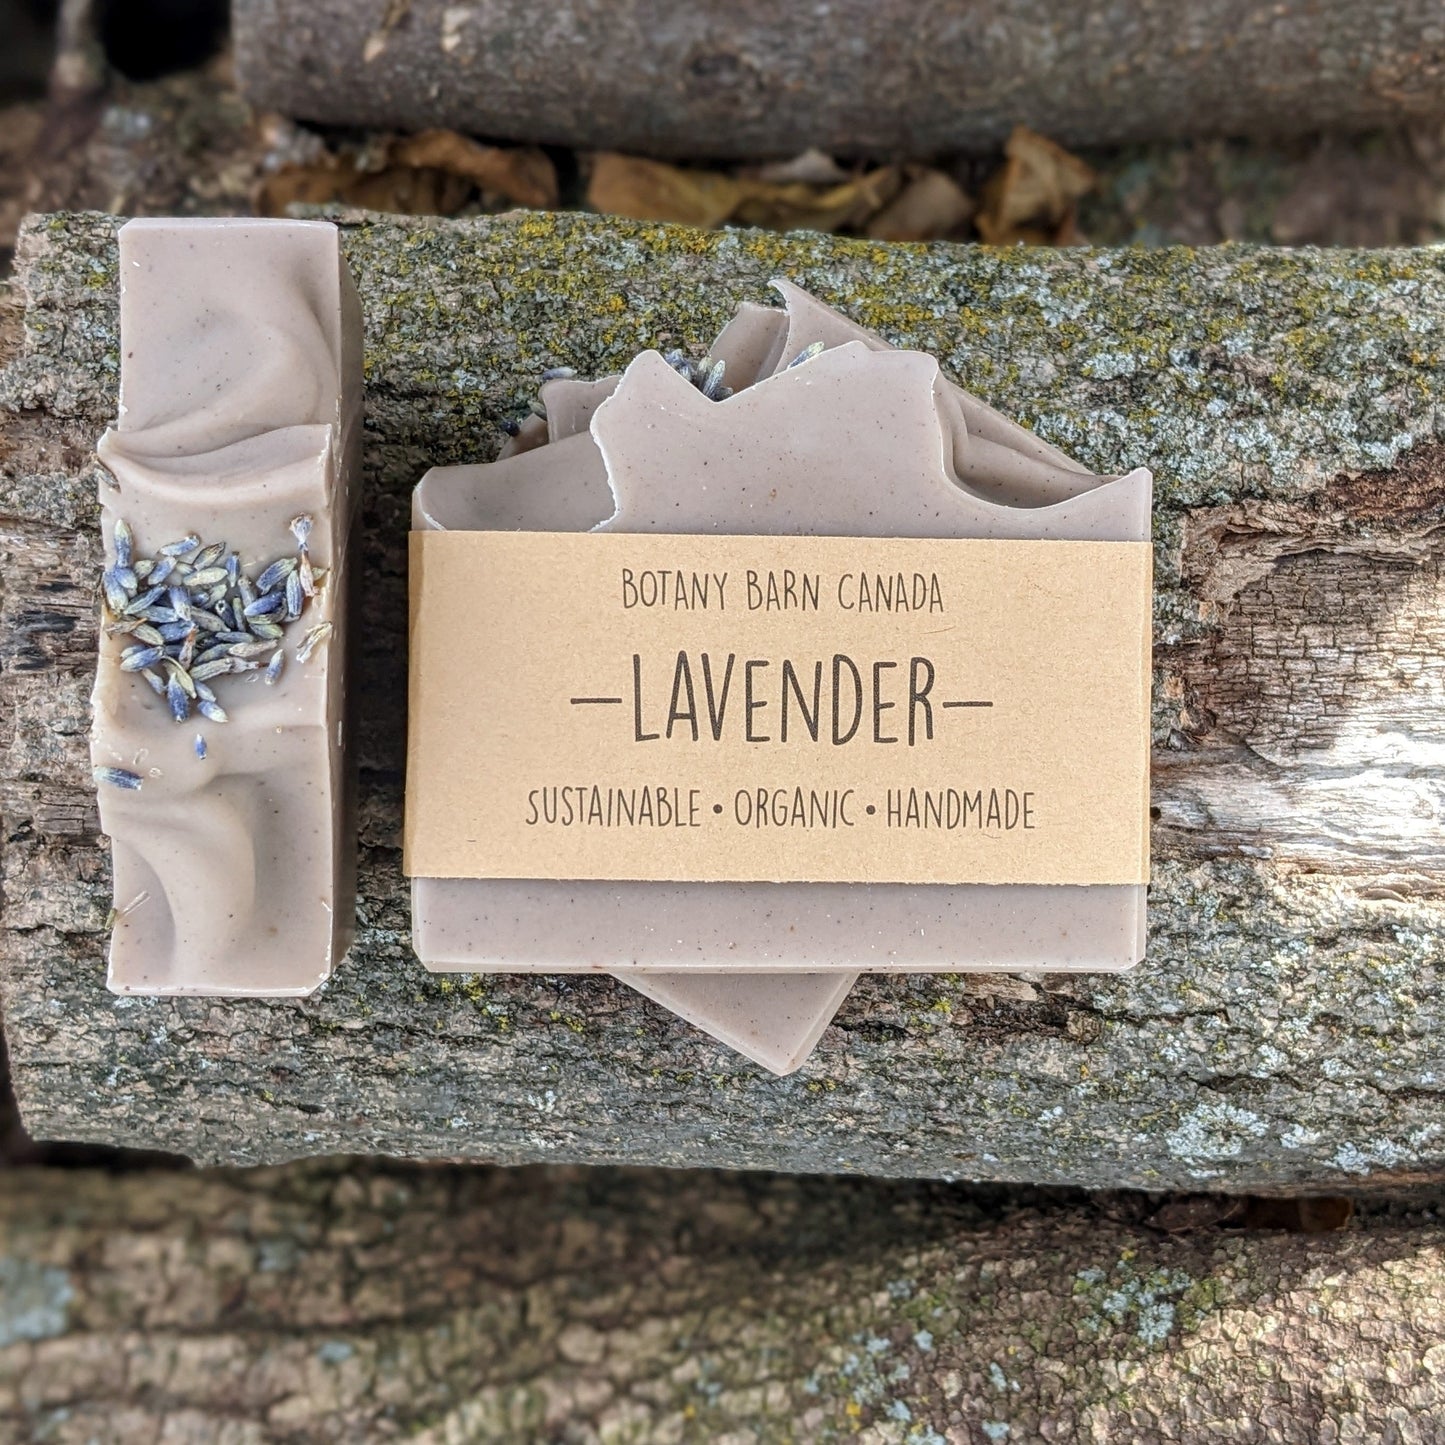 Lavender Lover Gift Box | Artisan Soap, Eco Friendly Lip Balm and Organic Lotion Bar